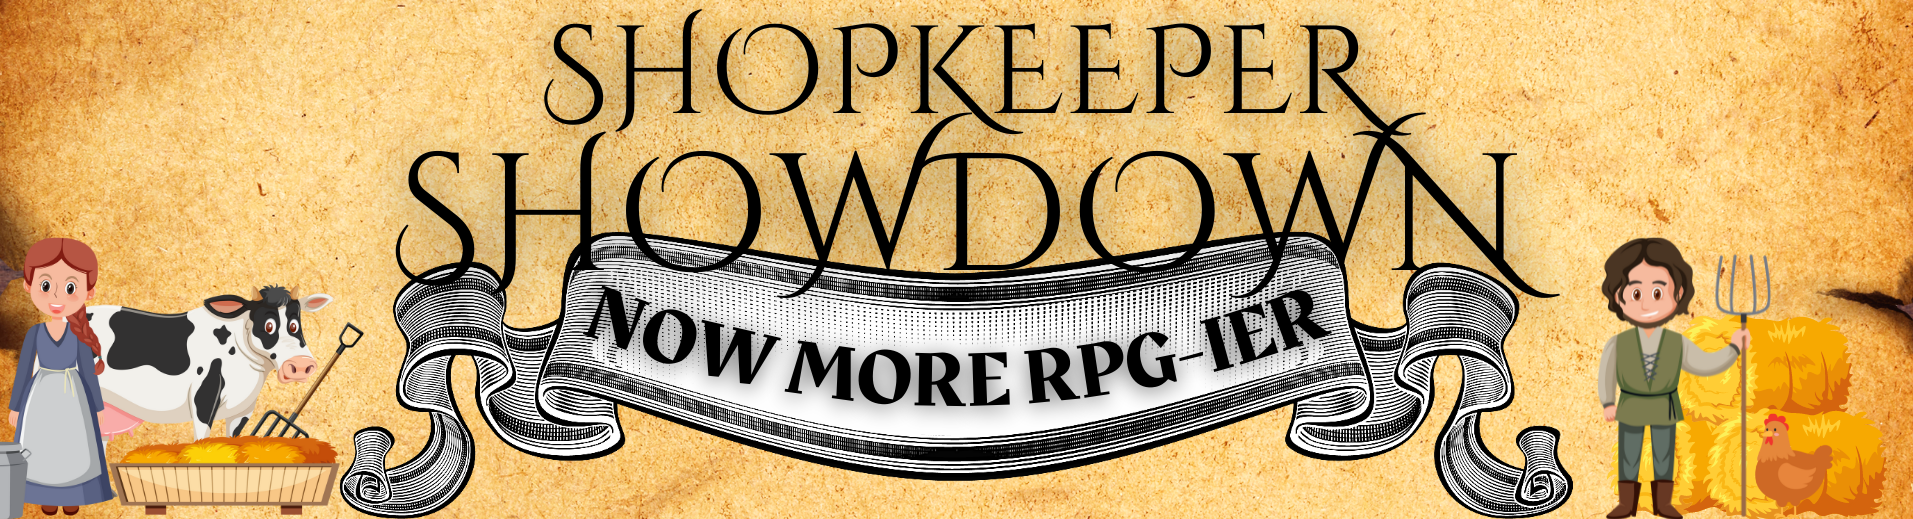 Shopkeeper Showdown: Now More RPG-ier